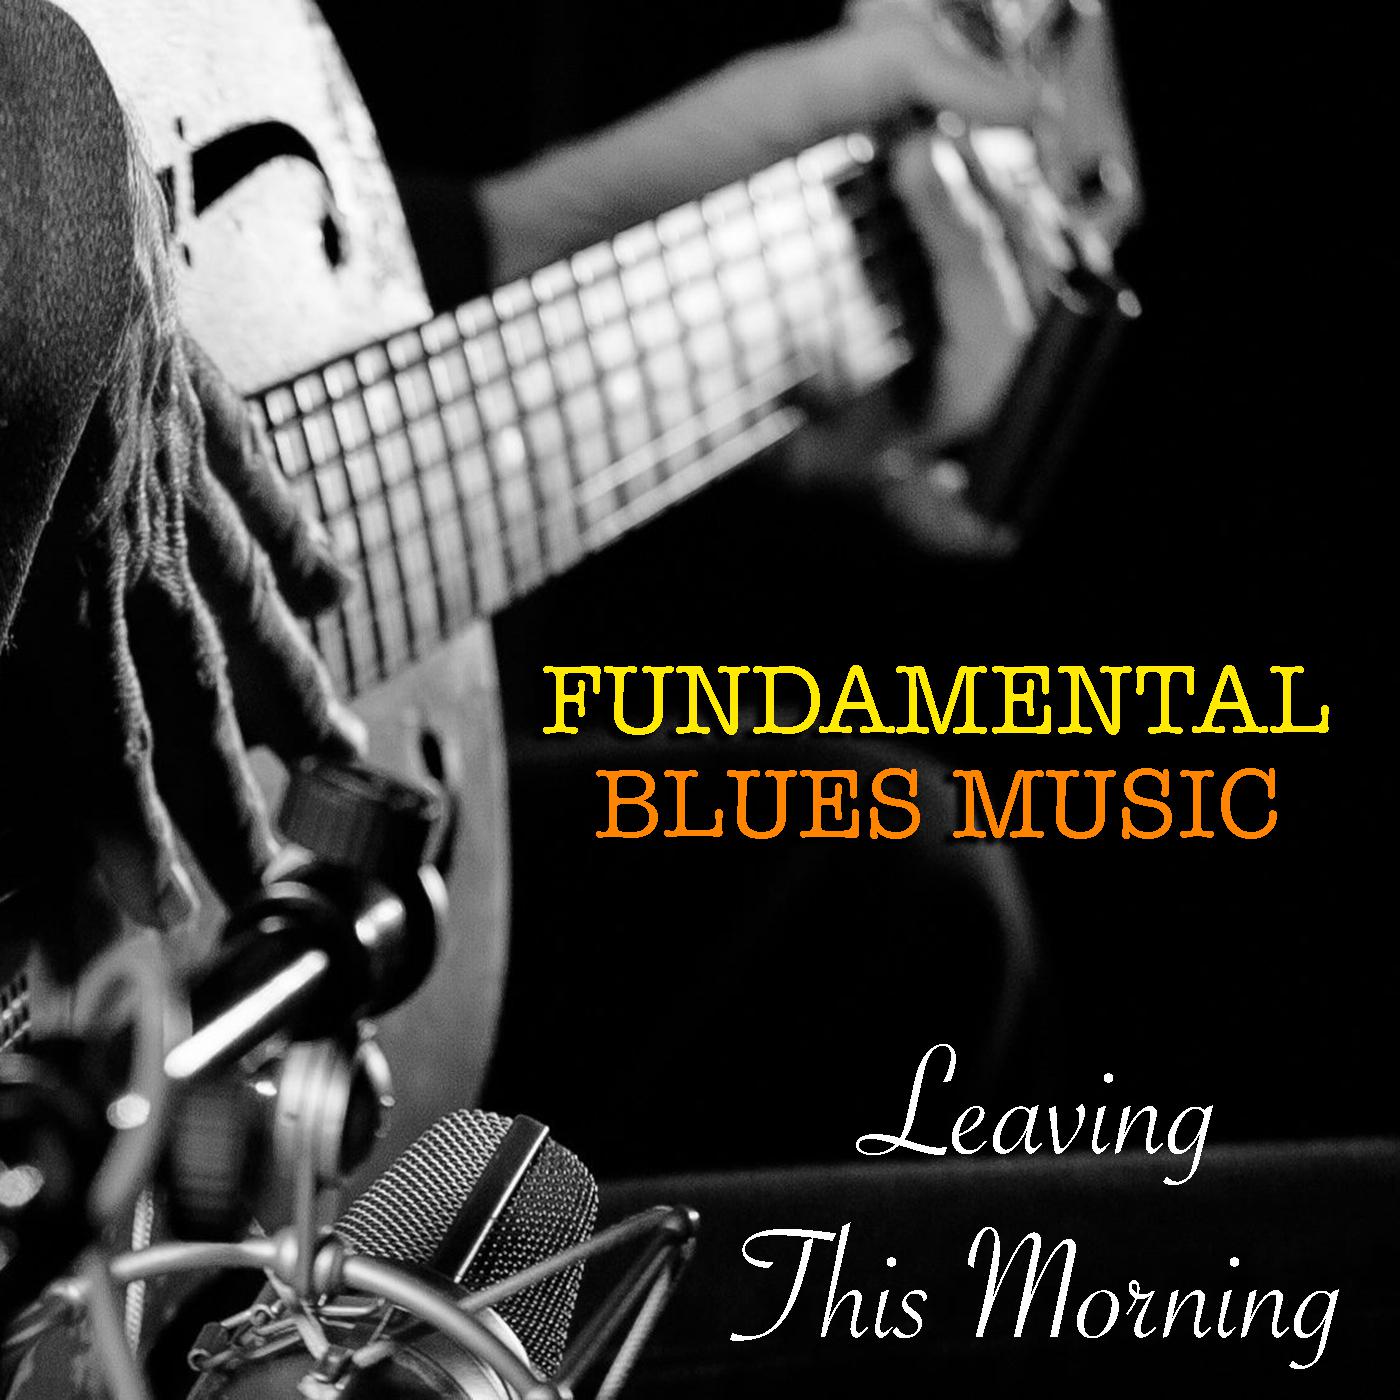 Leaving This Morning Fundamental Blues Music